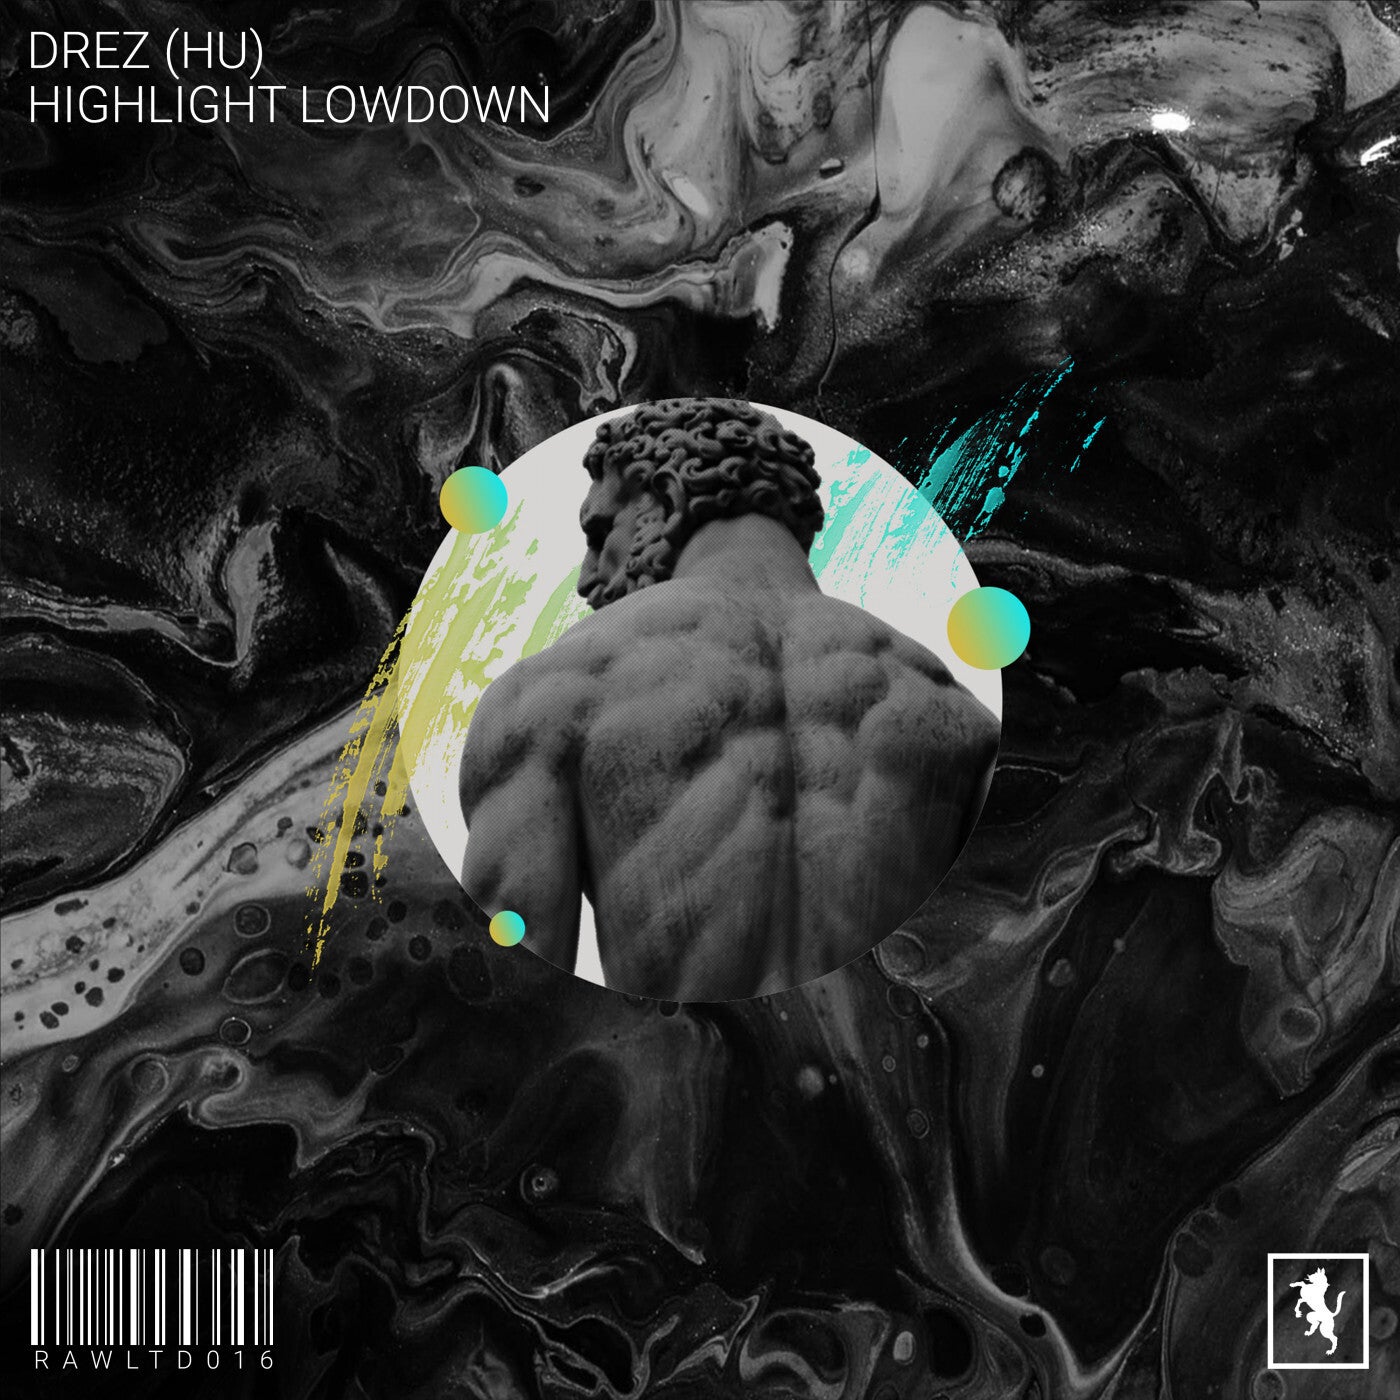 Drez (HU) - Highlight Lowdown [RAWLTD016]